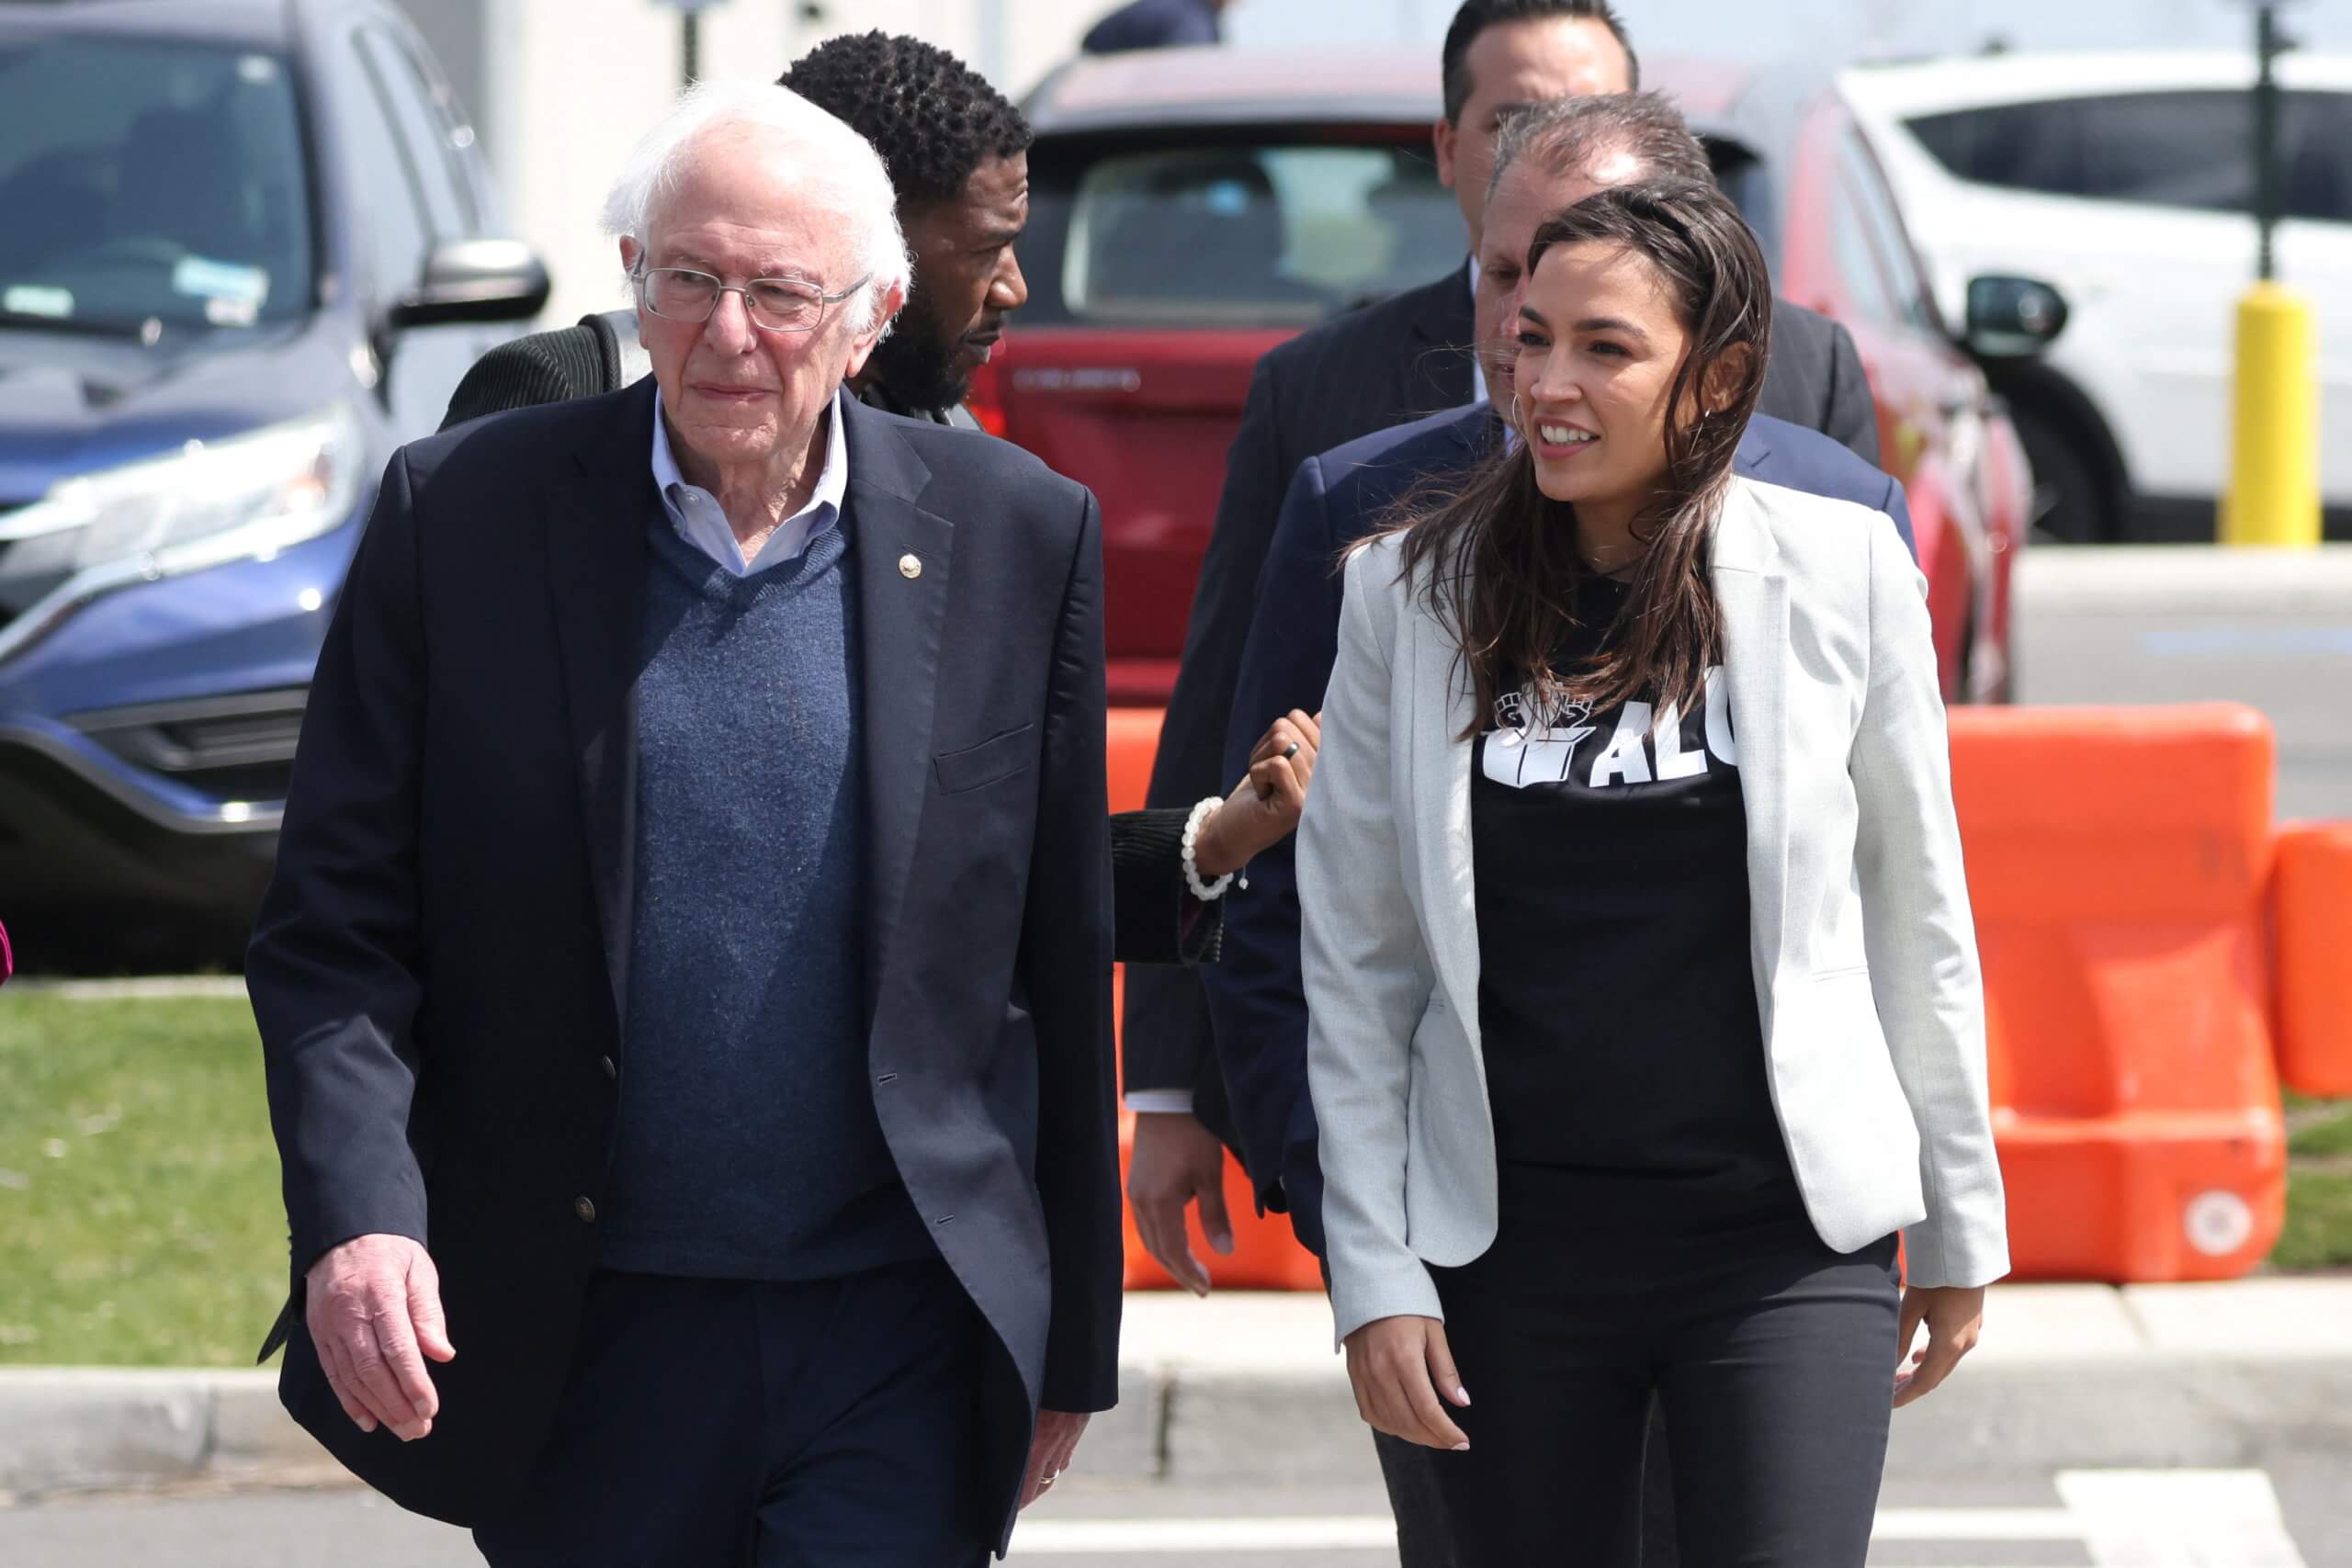 Senator Bernie Sanders and Rep. Alexandria Ocasio-Cortez arrive at the Amazon facility during a rally in Staten Island.